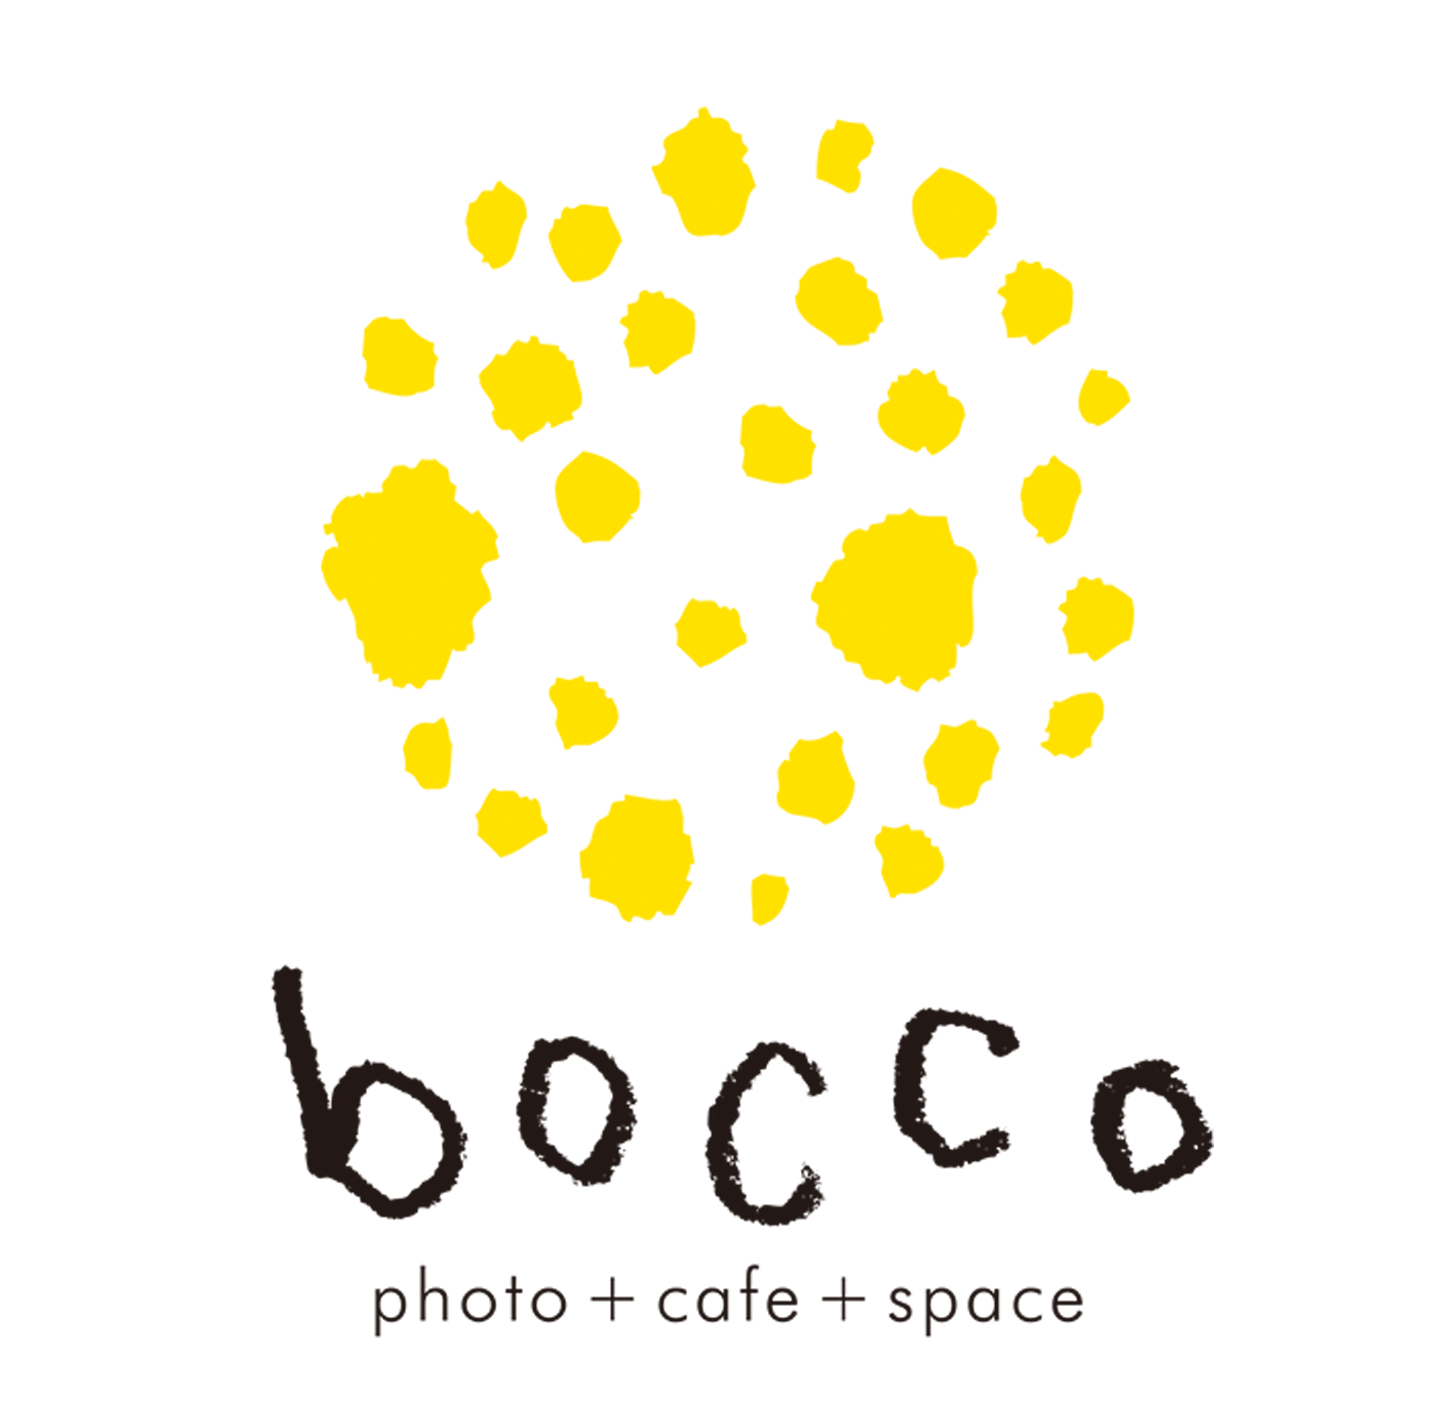 bocco blog